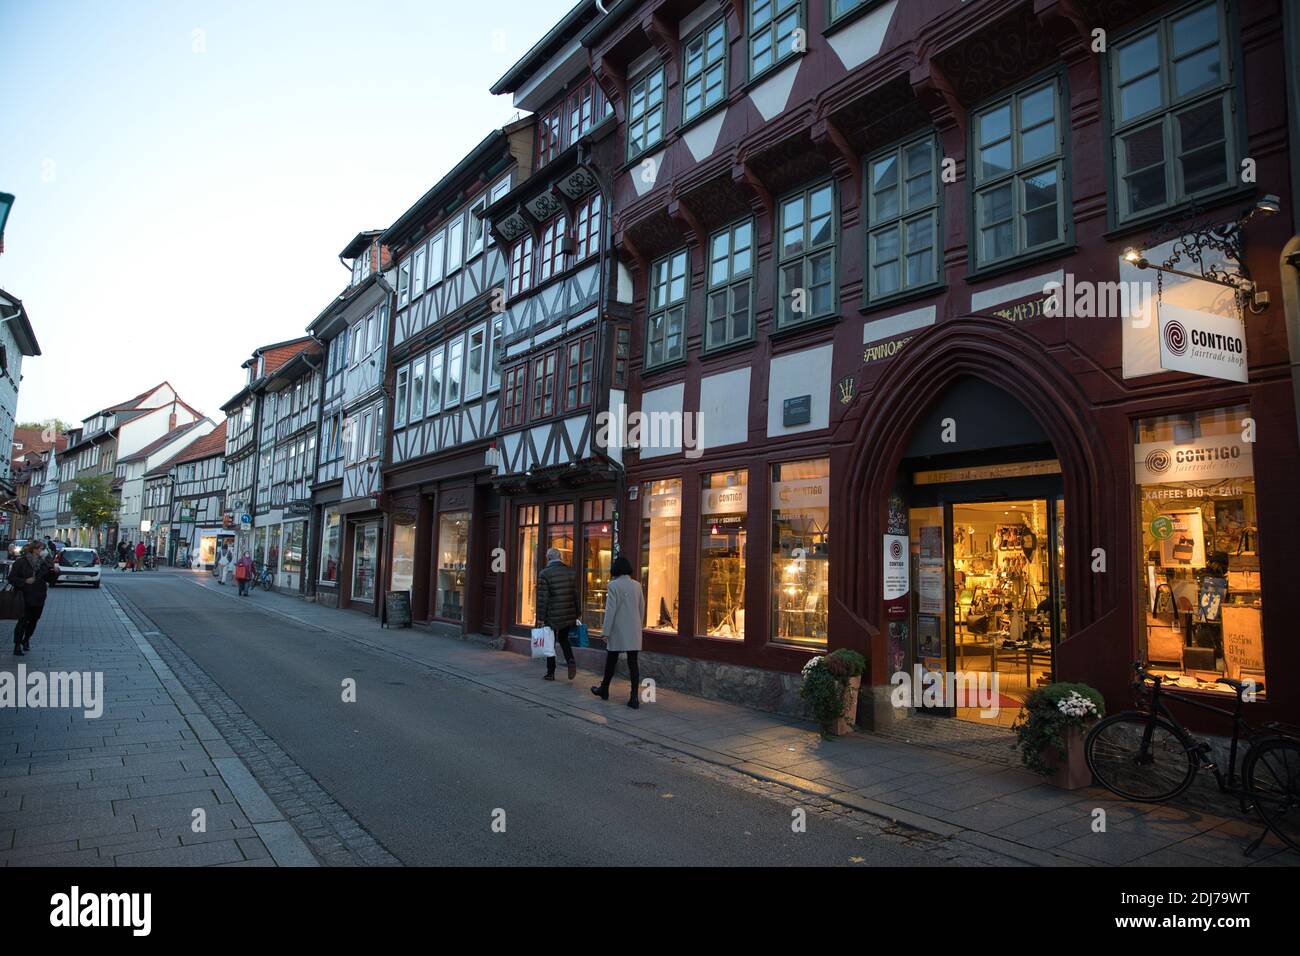 Göttingen Germany. Autumn, 2020. Old town shops and architecture on narrow street. Vanishing point. Stock Photo